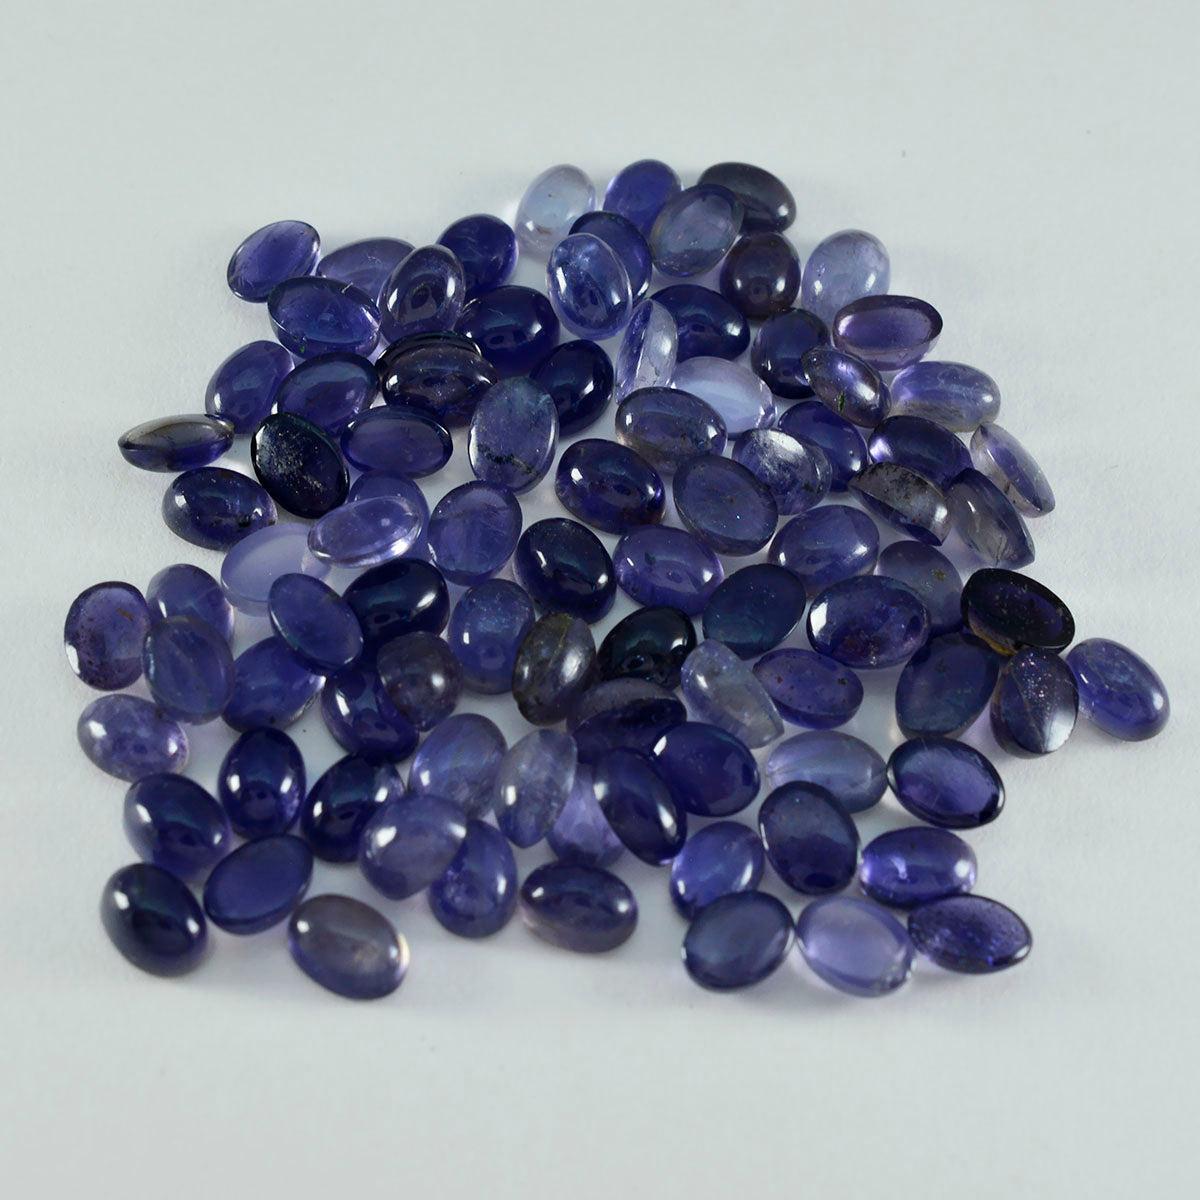 riyogems 1 pz cabochon di iolite blu 3x5 mm di forma ovale, pietra preziosa sfusa di bella qualità